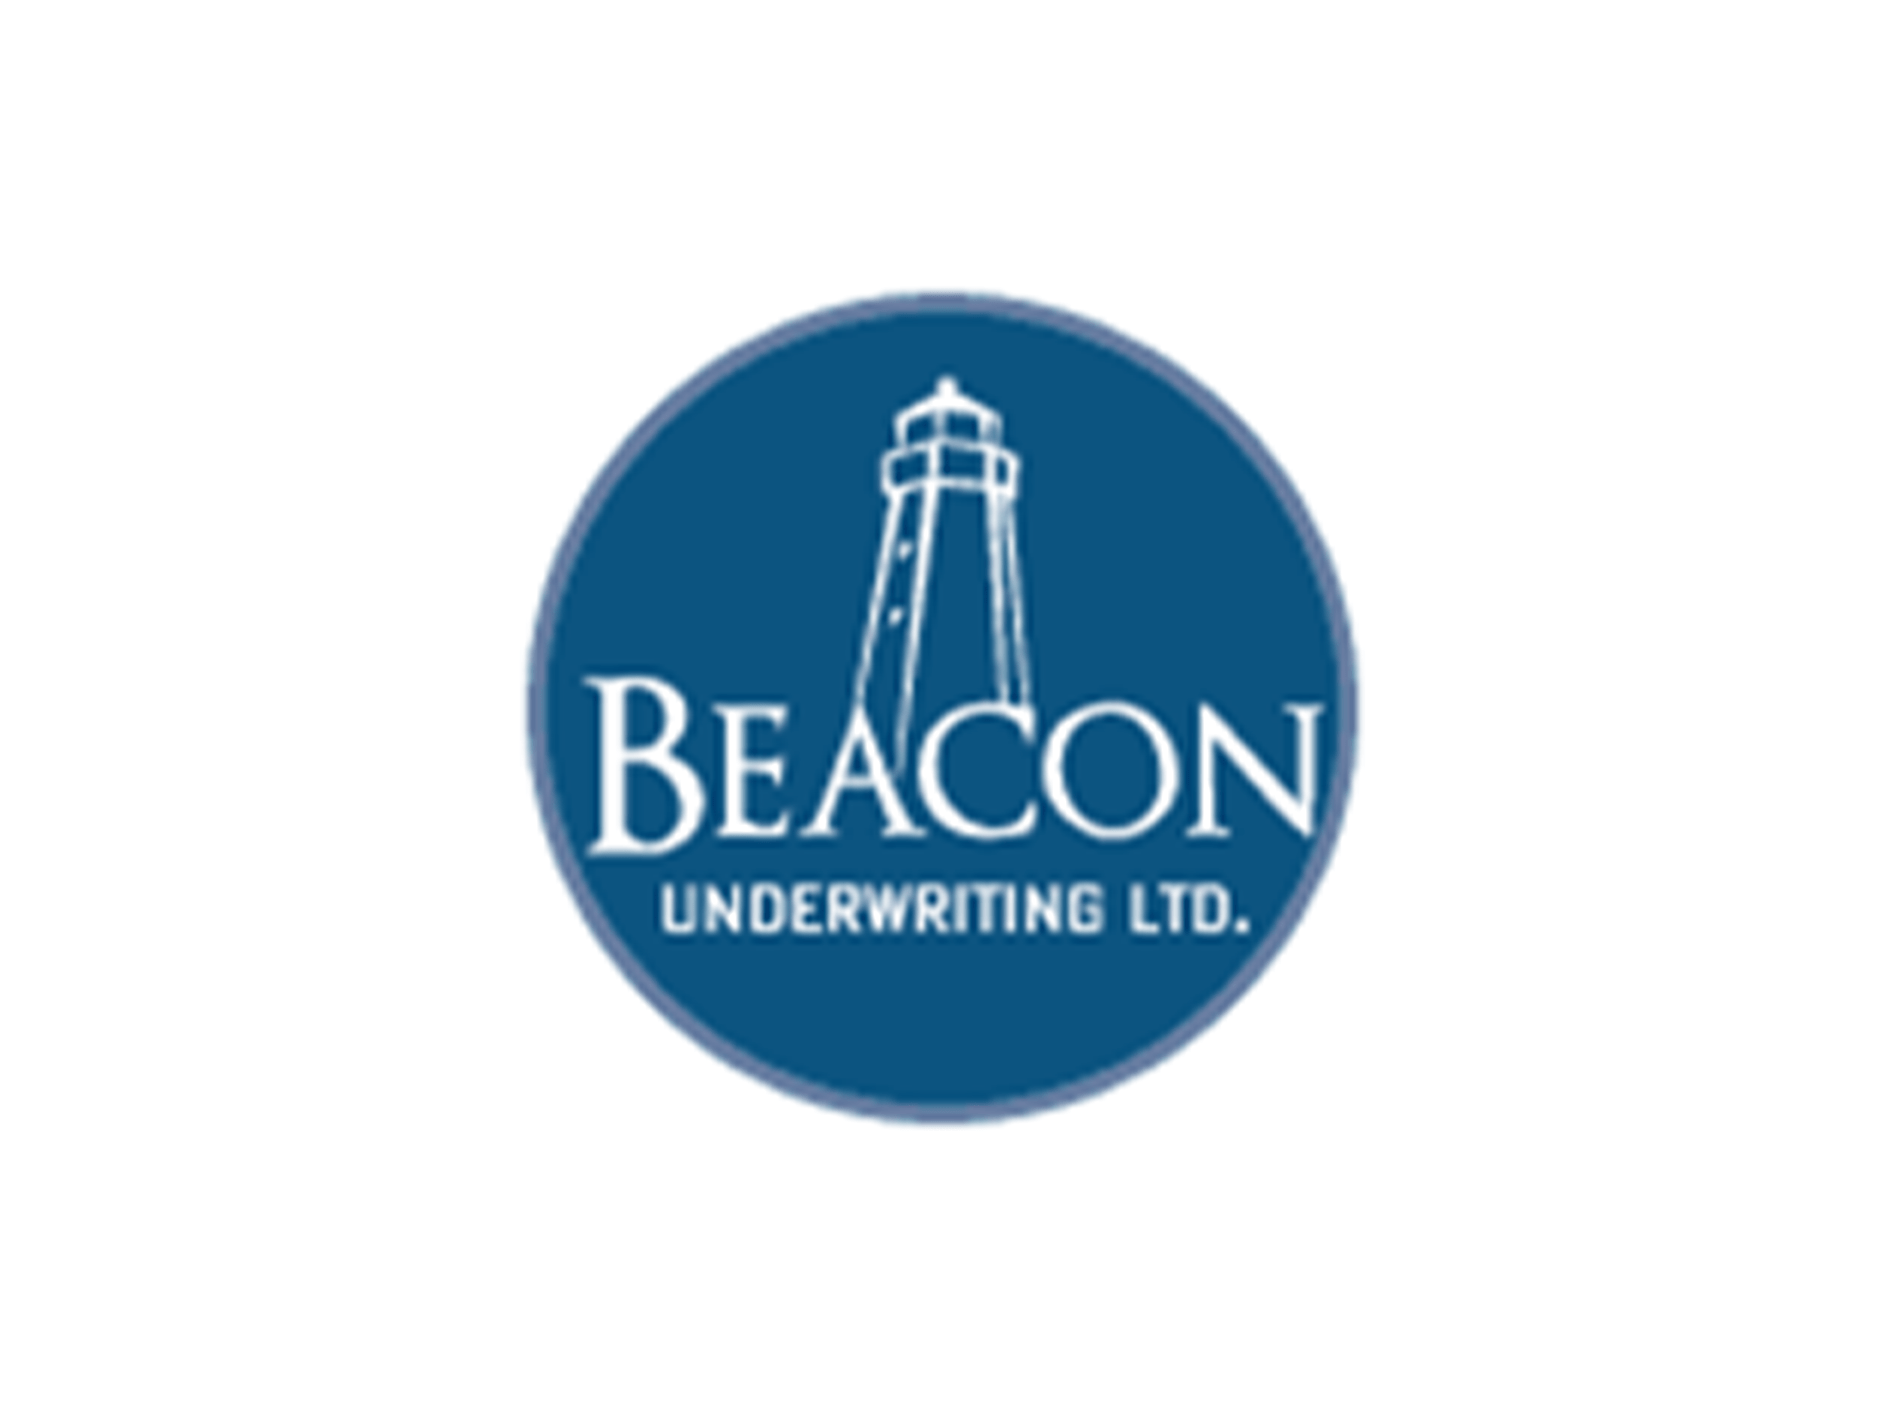 Beacon Underwriting Ltd.